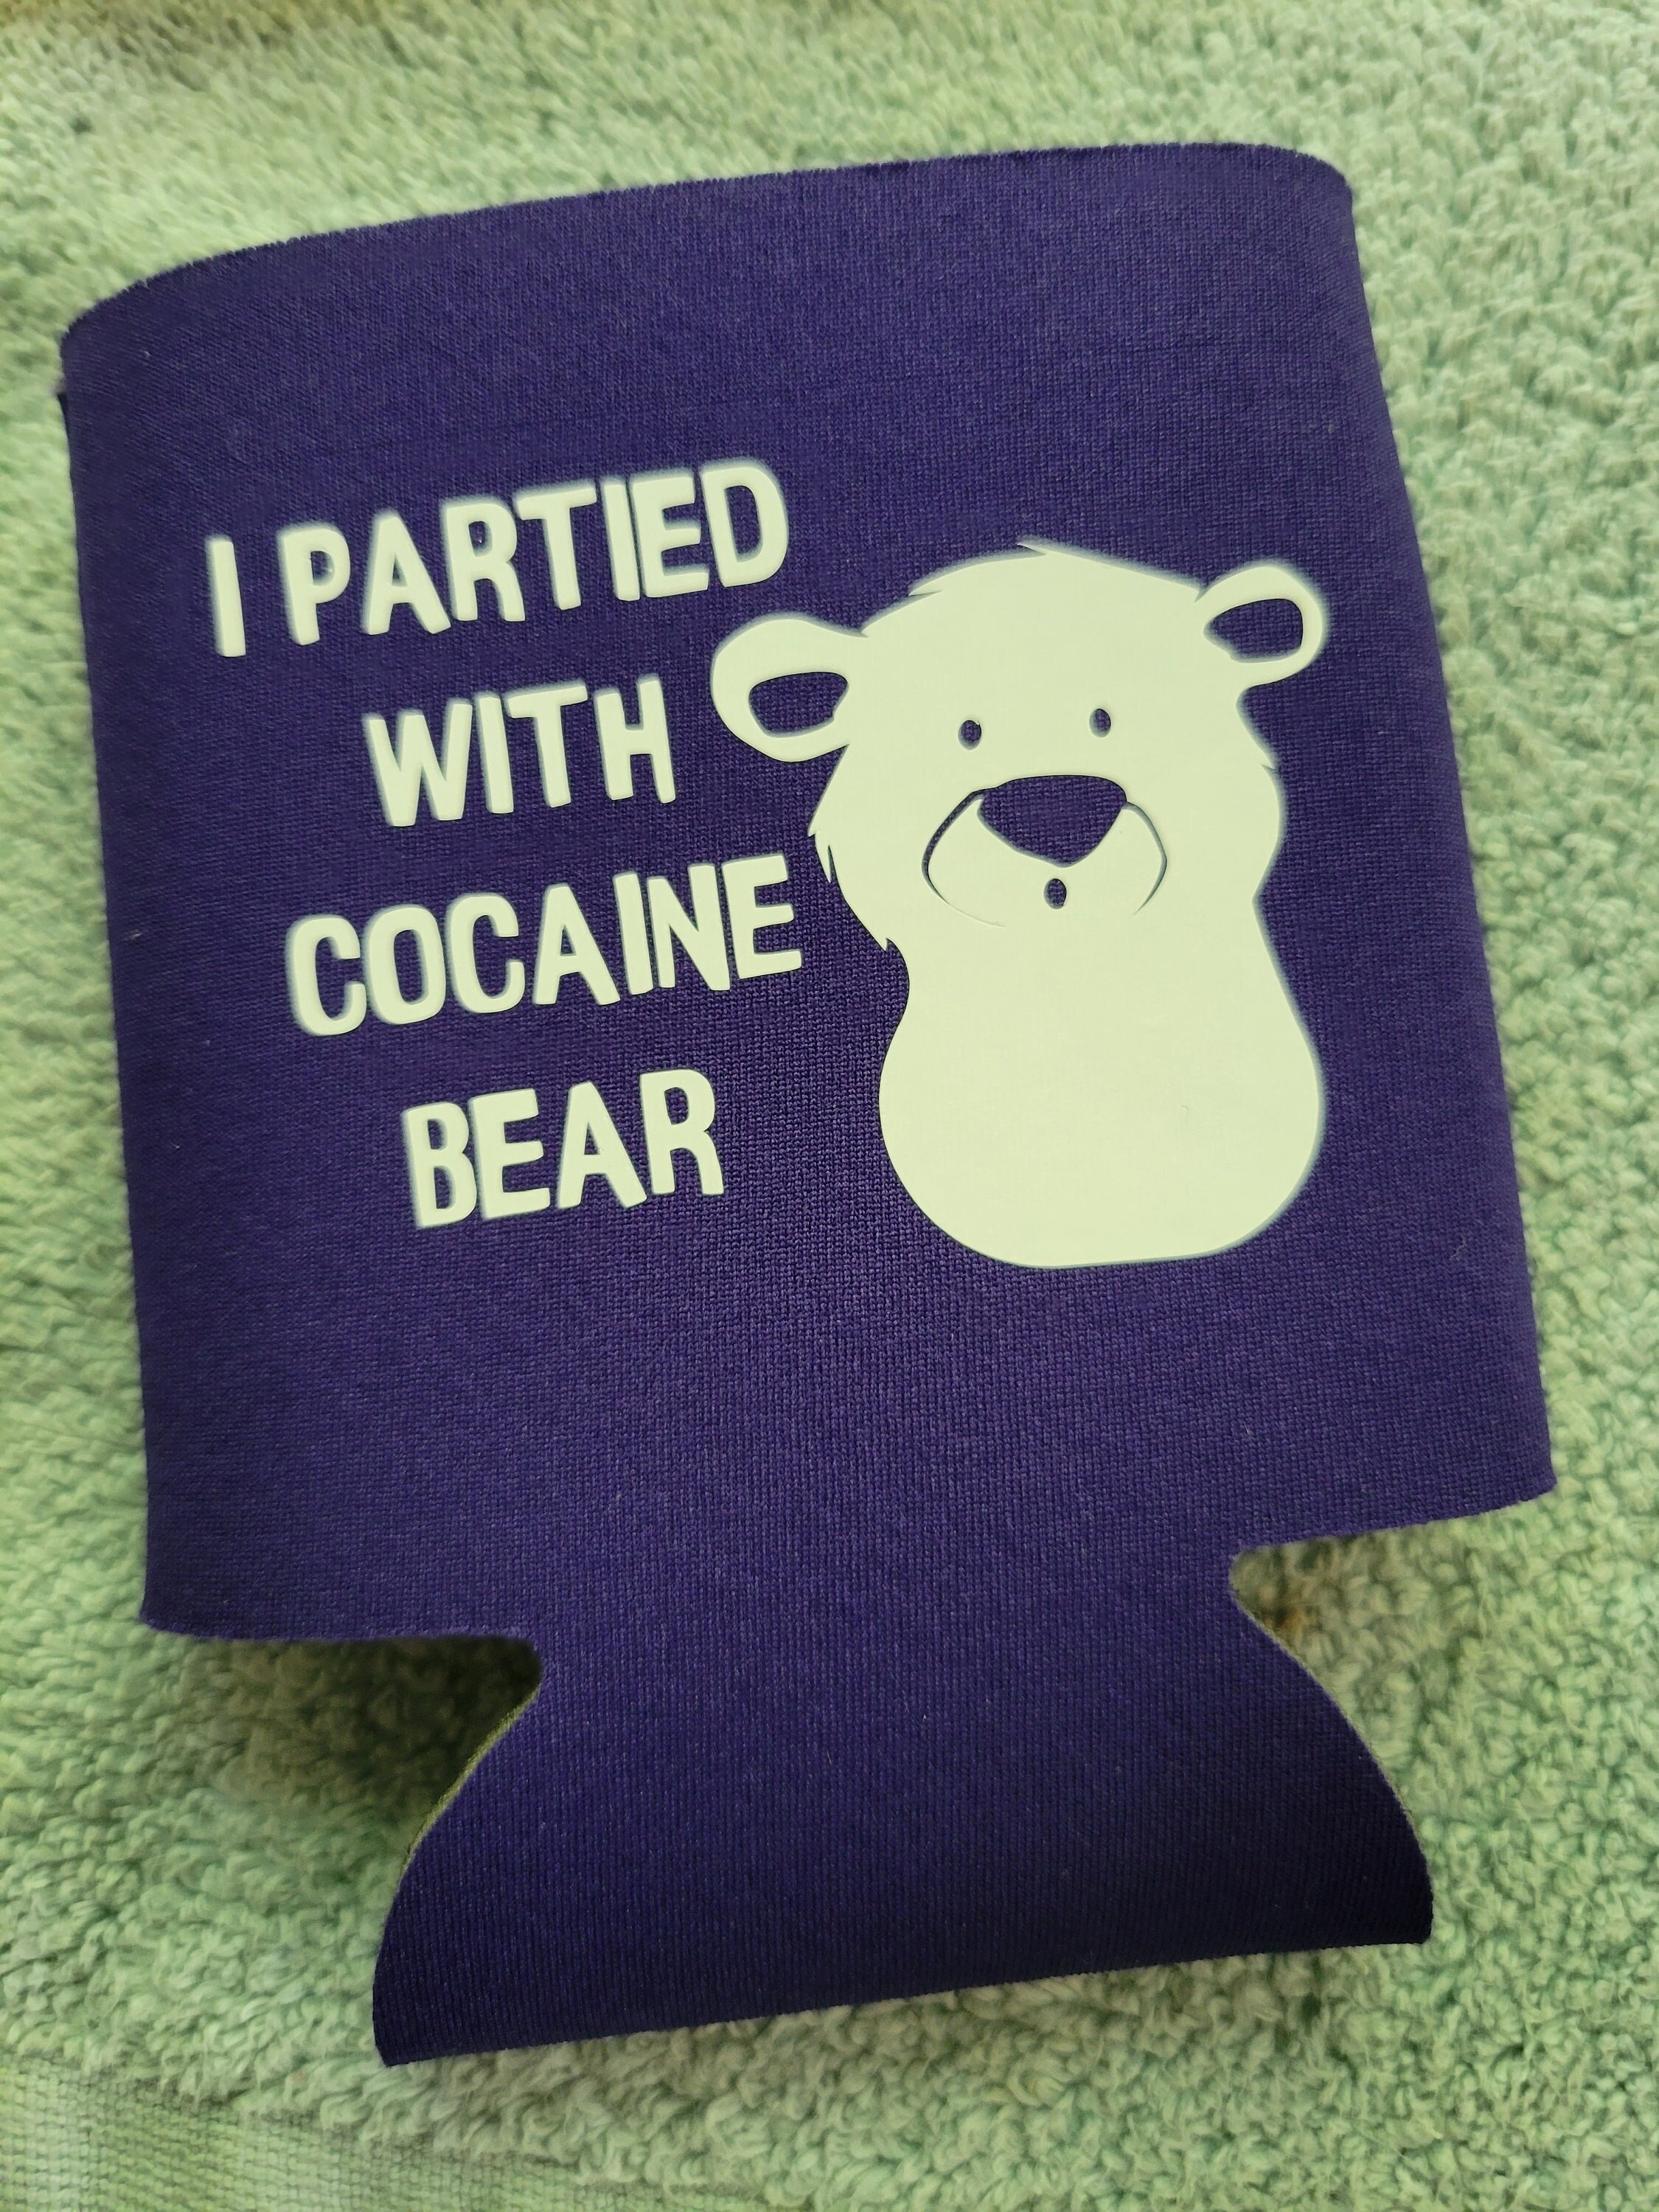 Cocaine Bear Apex Predator T-Shirt Athletic Heather / XXXL